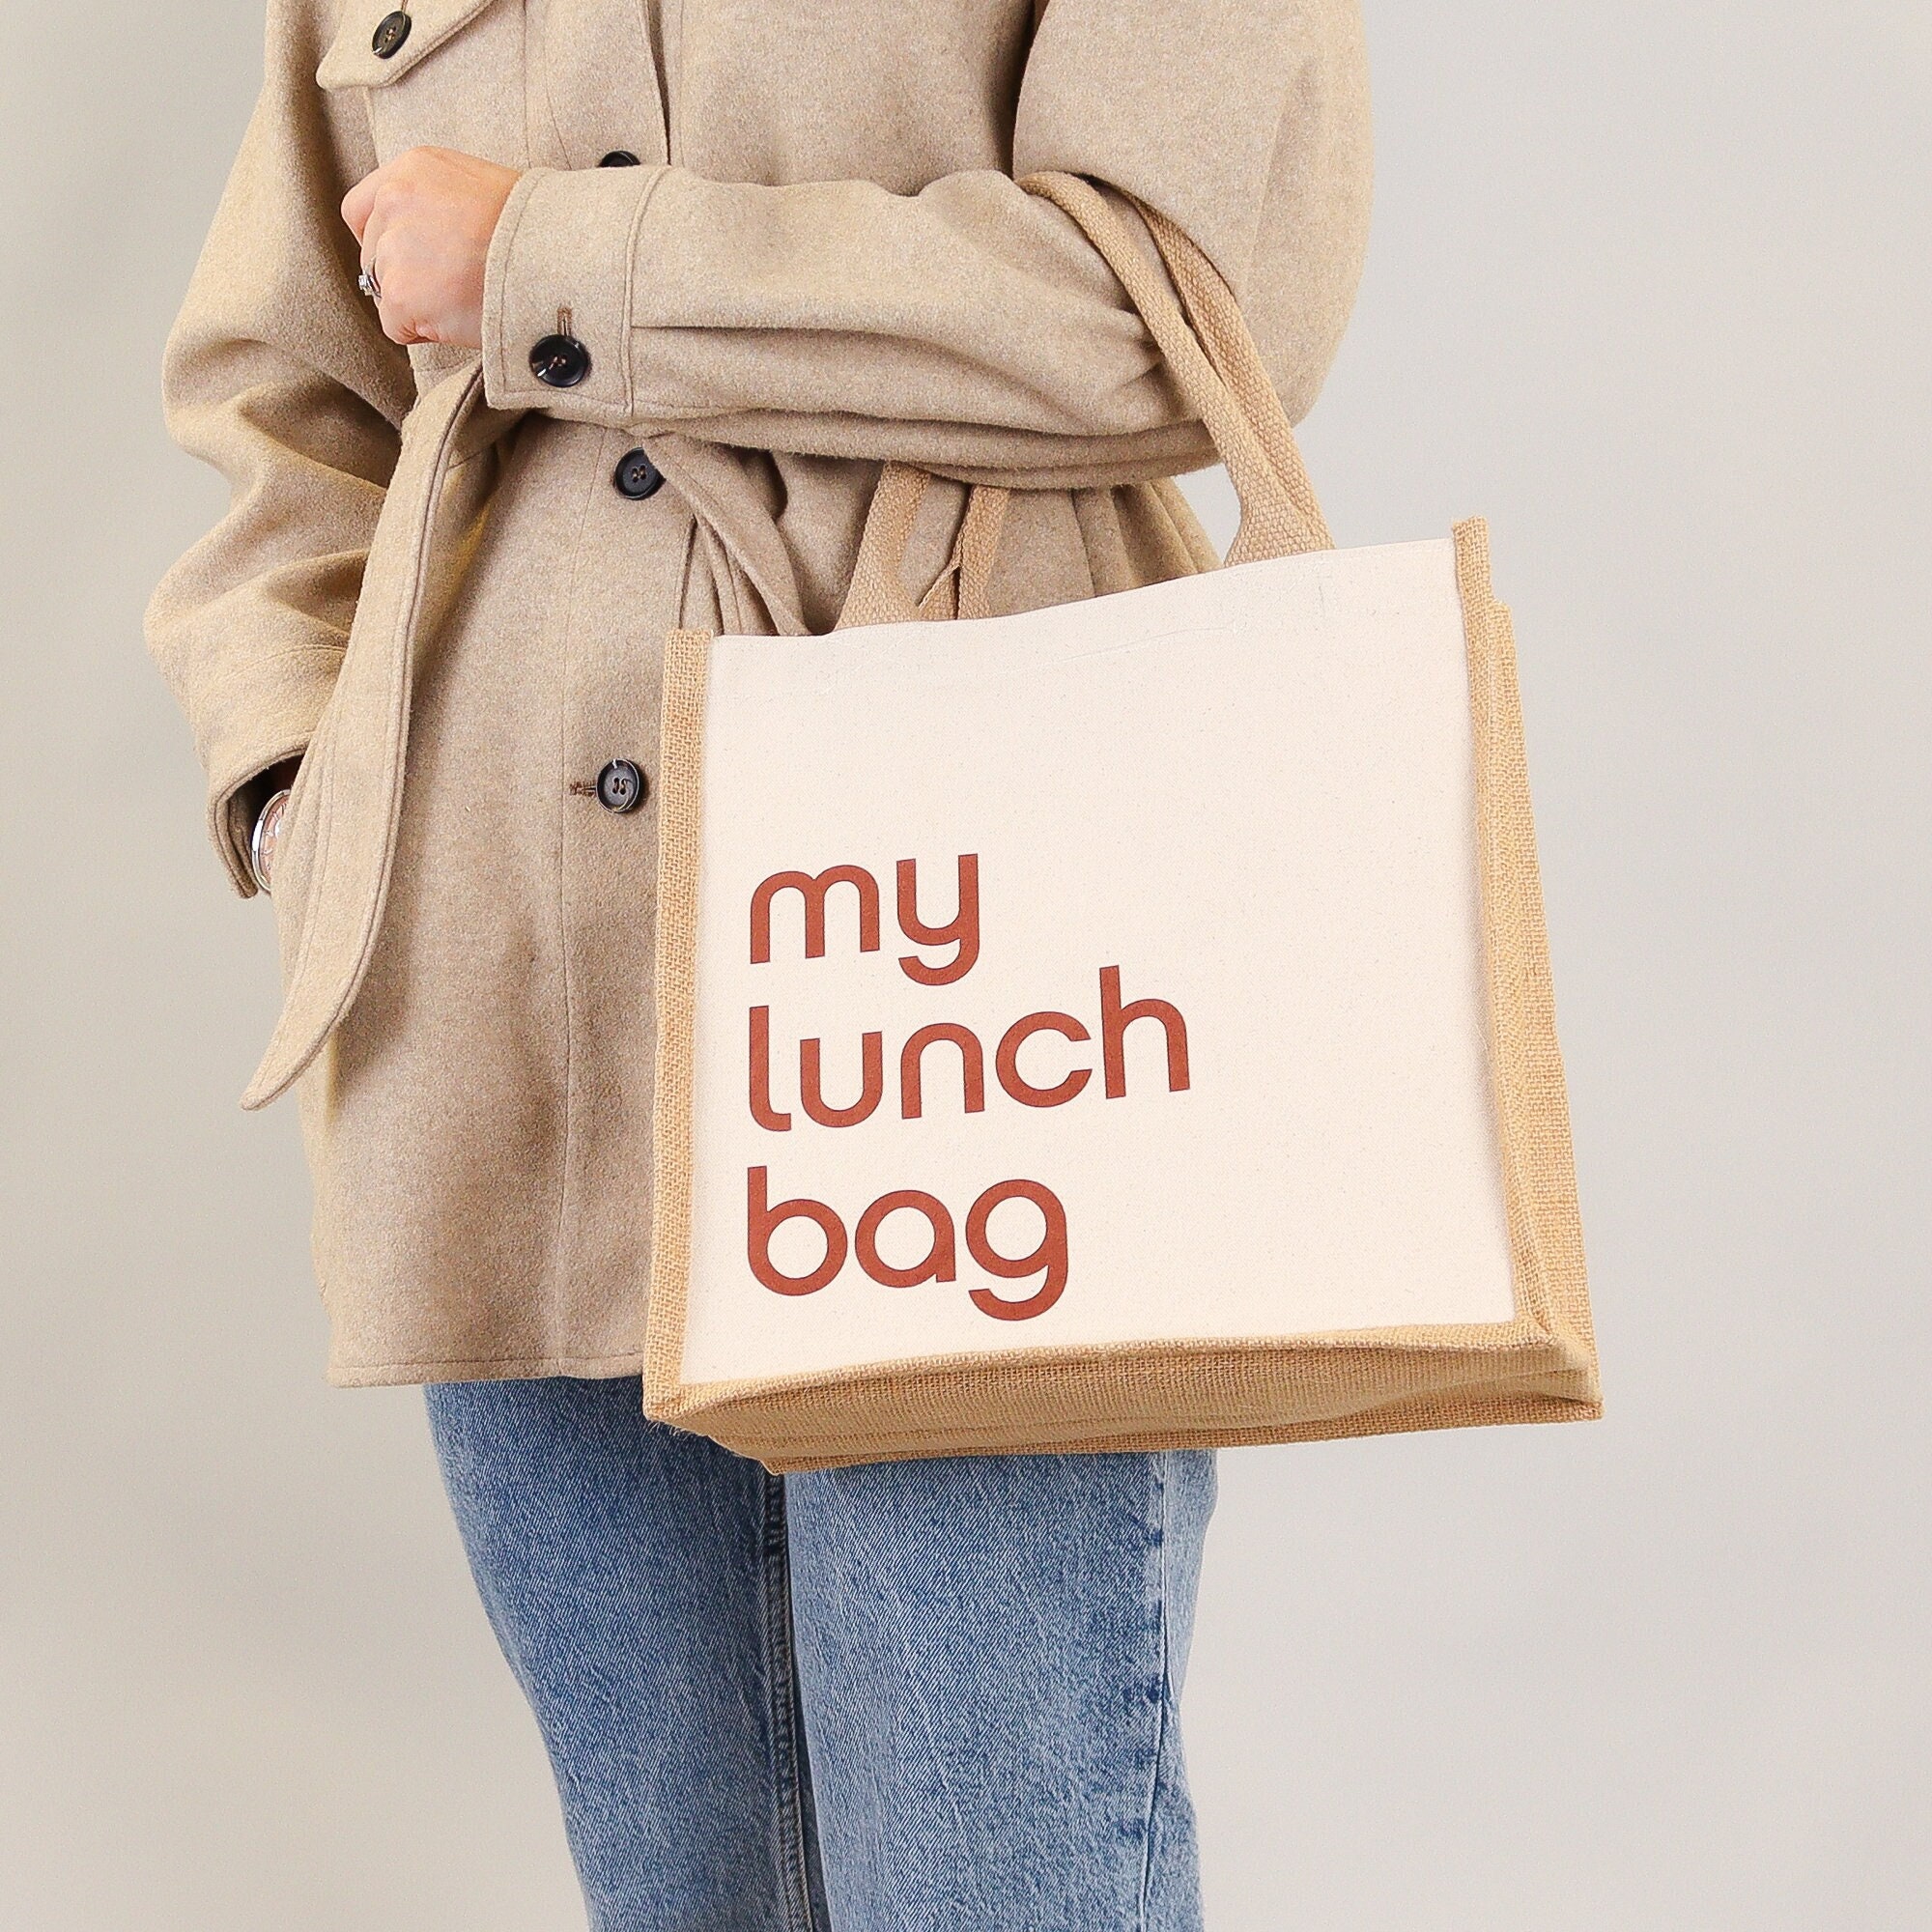 designer lunch bags for ladies